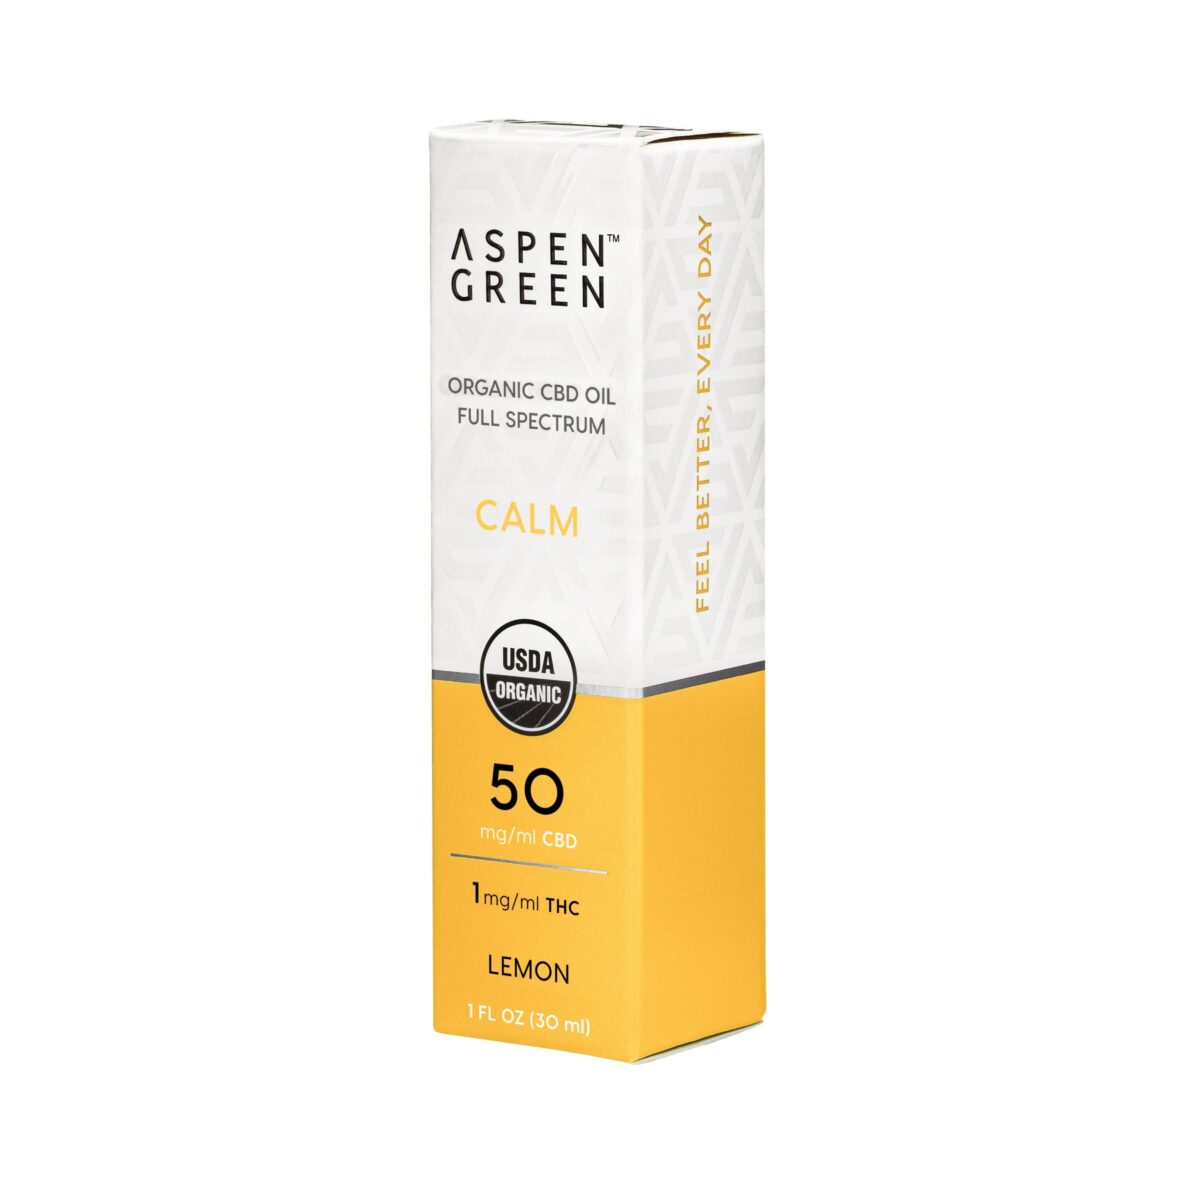 Aspen Green USDA Certified Organic CBD Oil Box, Calm (50mg/ml CBD), Lemon Flavor